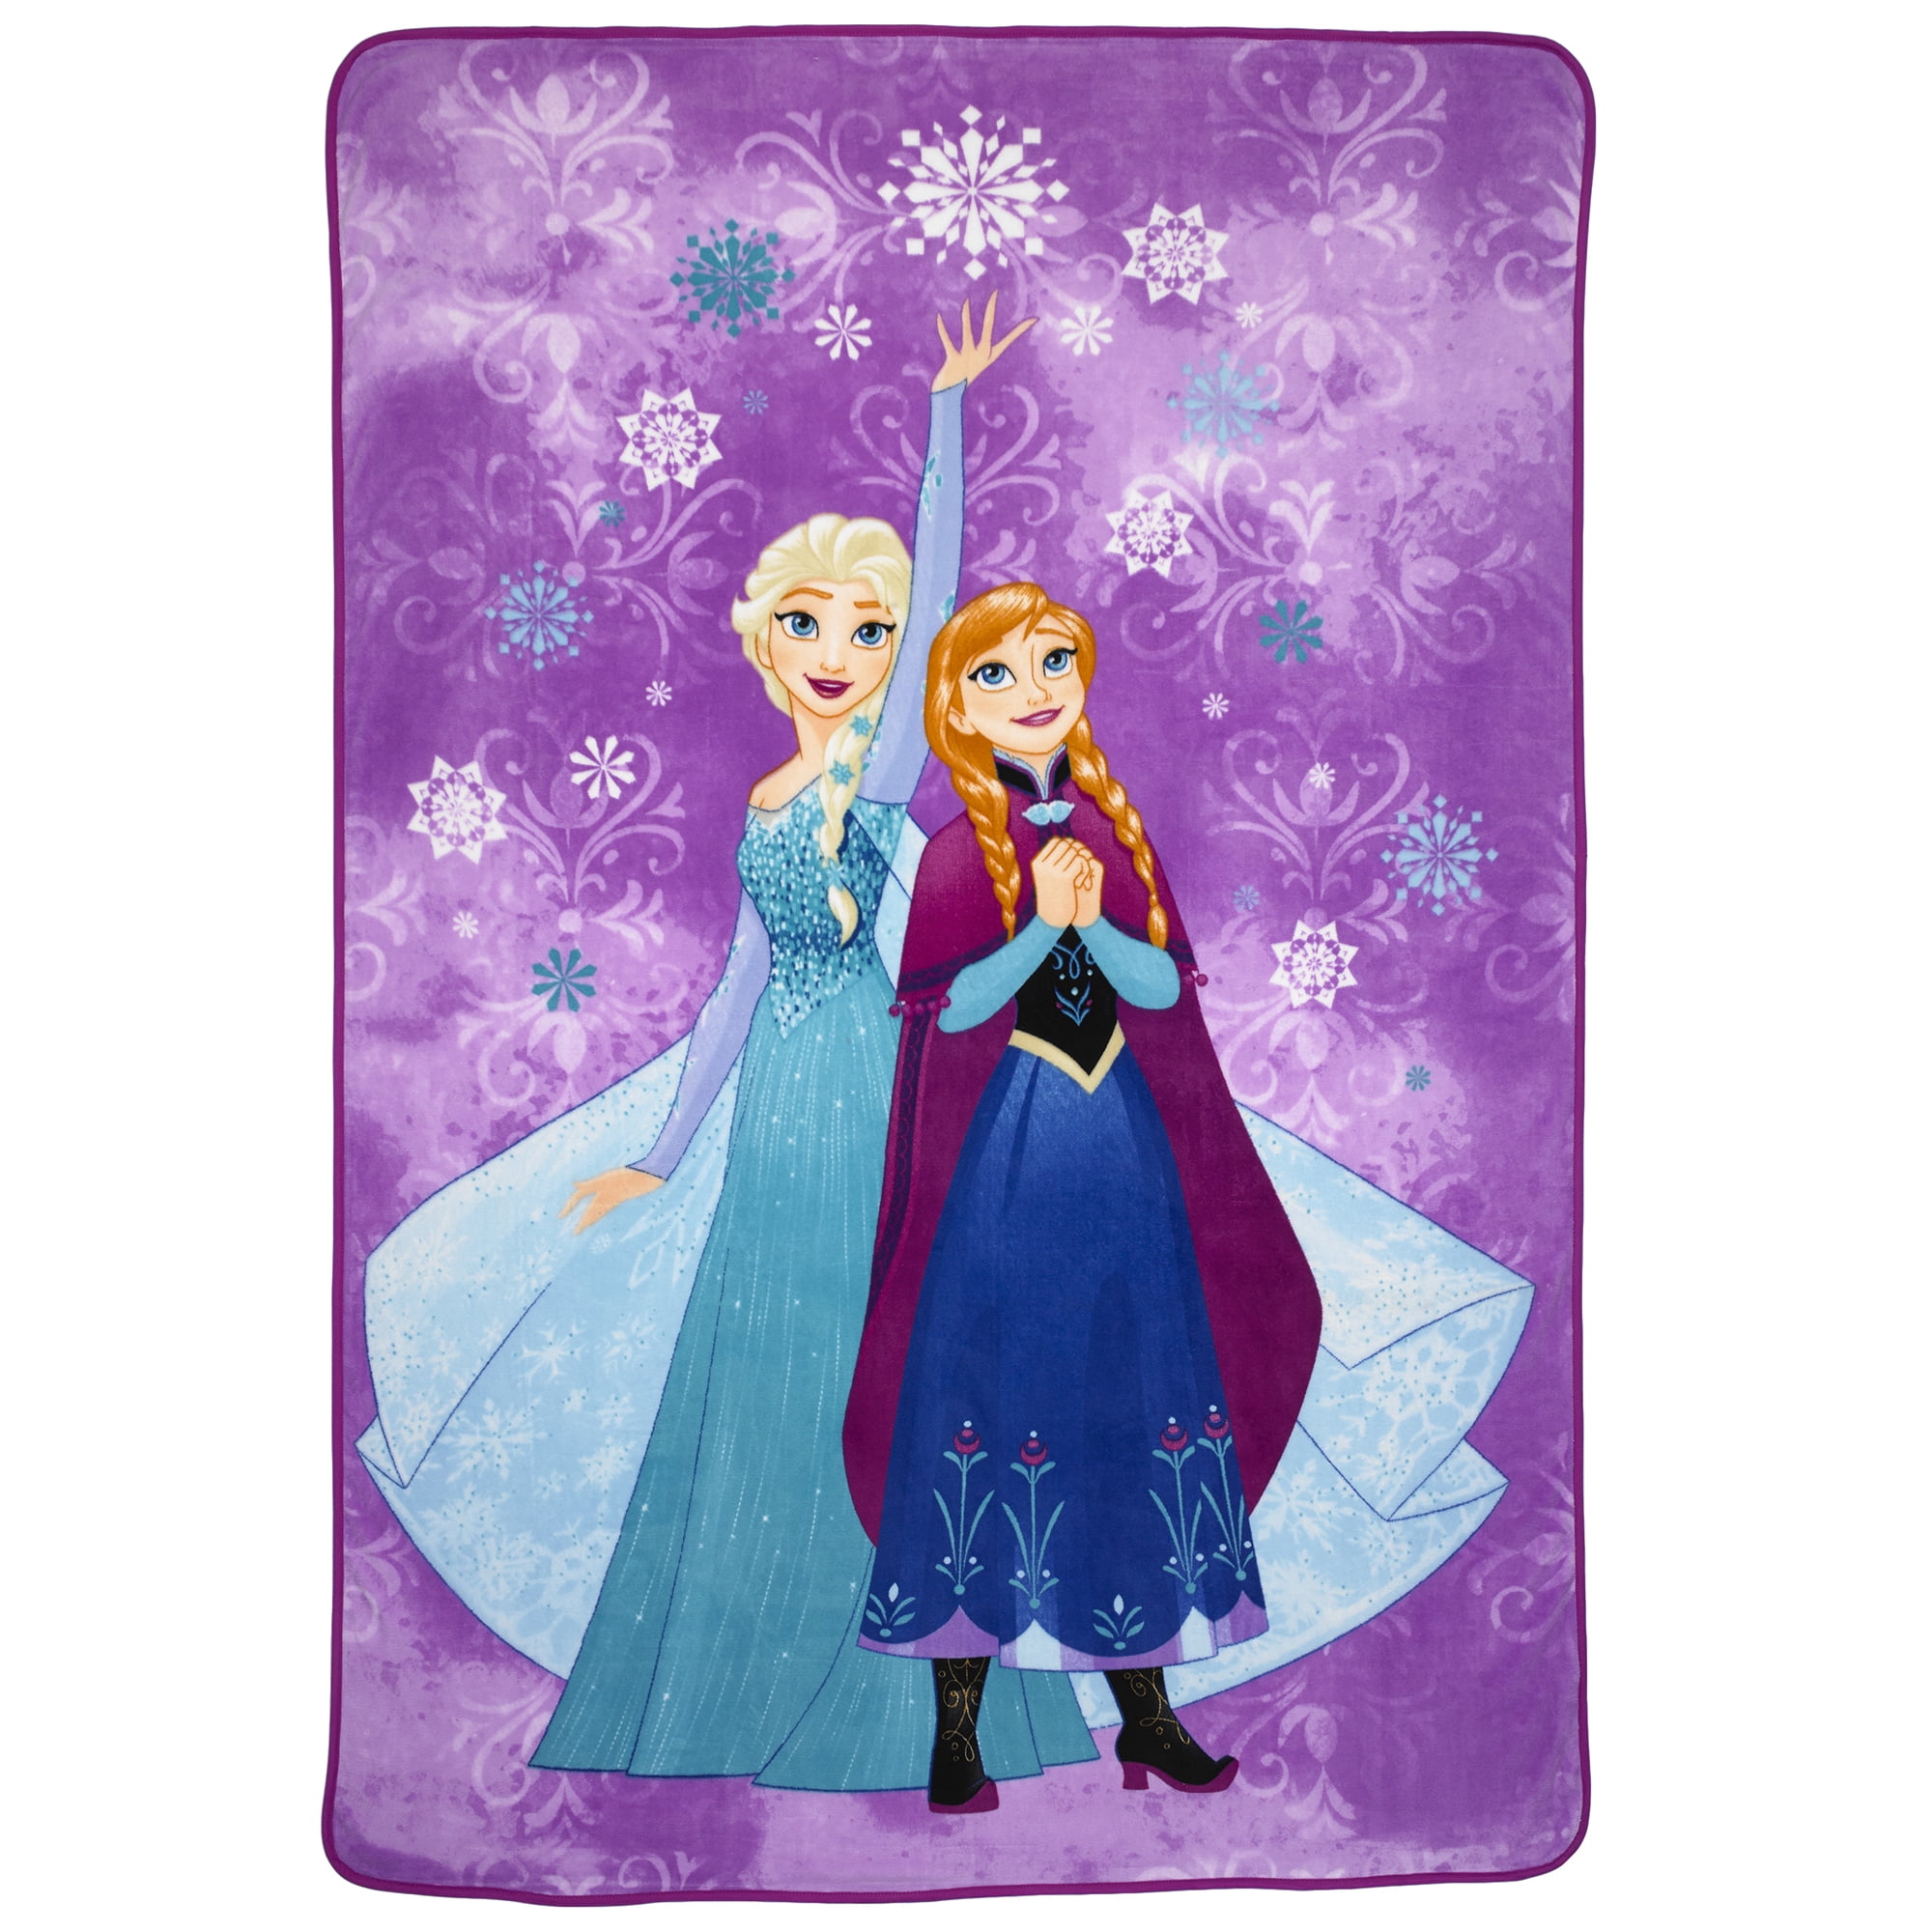 Disney Frozen Queen Elsa & Princess Anna Super Soft Plush Fleece Throw Blanket 